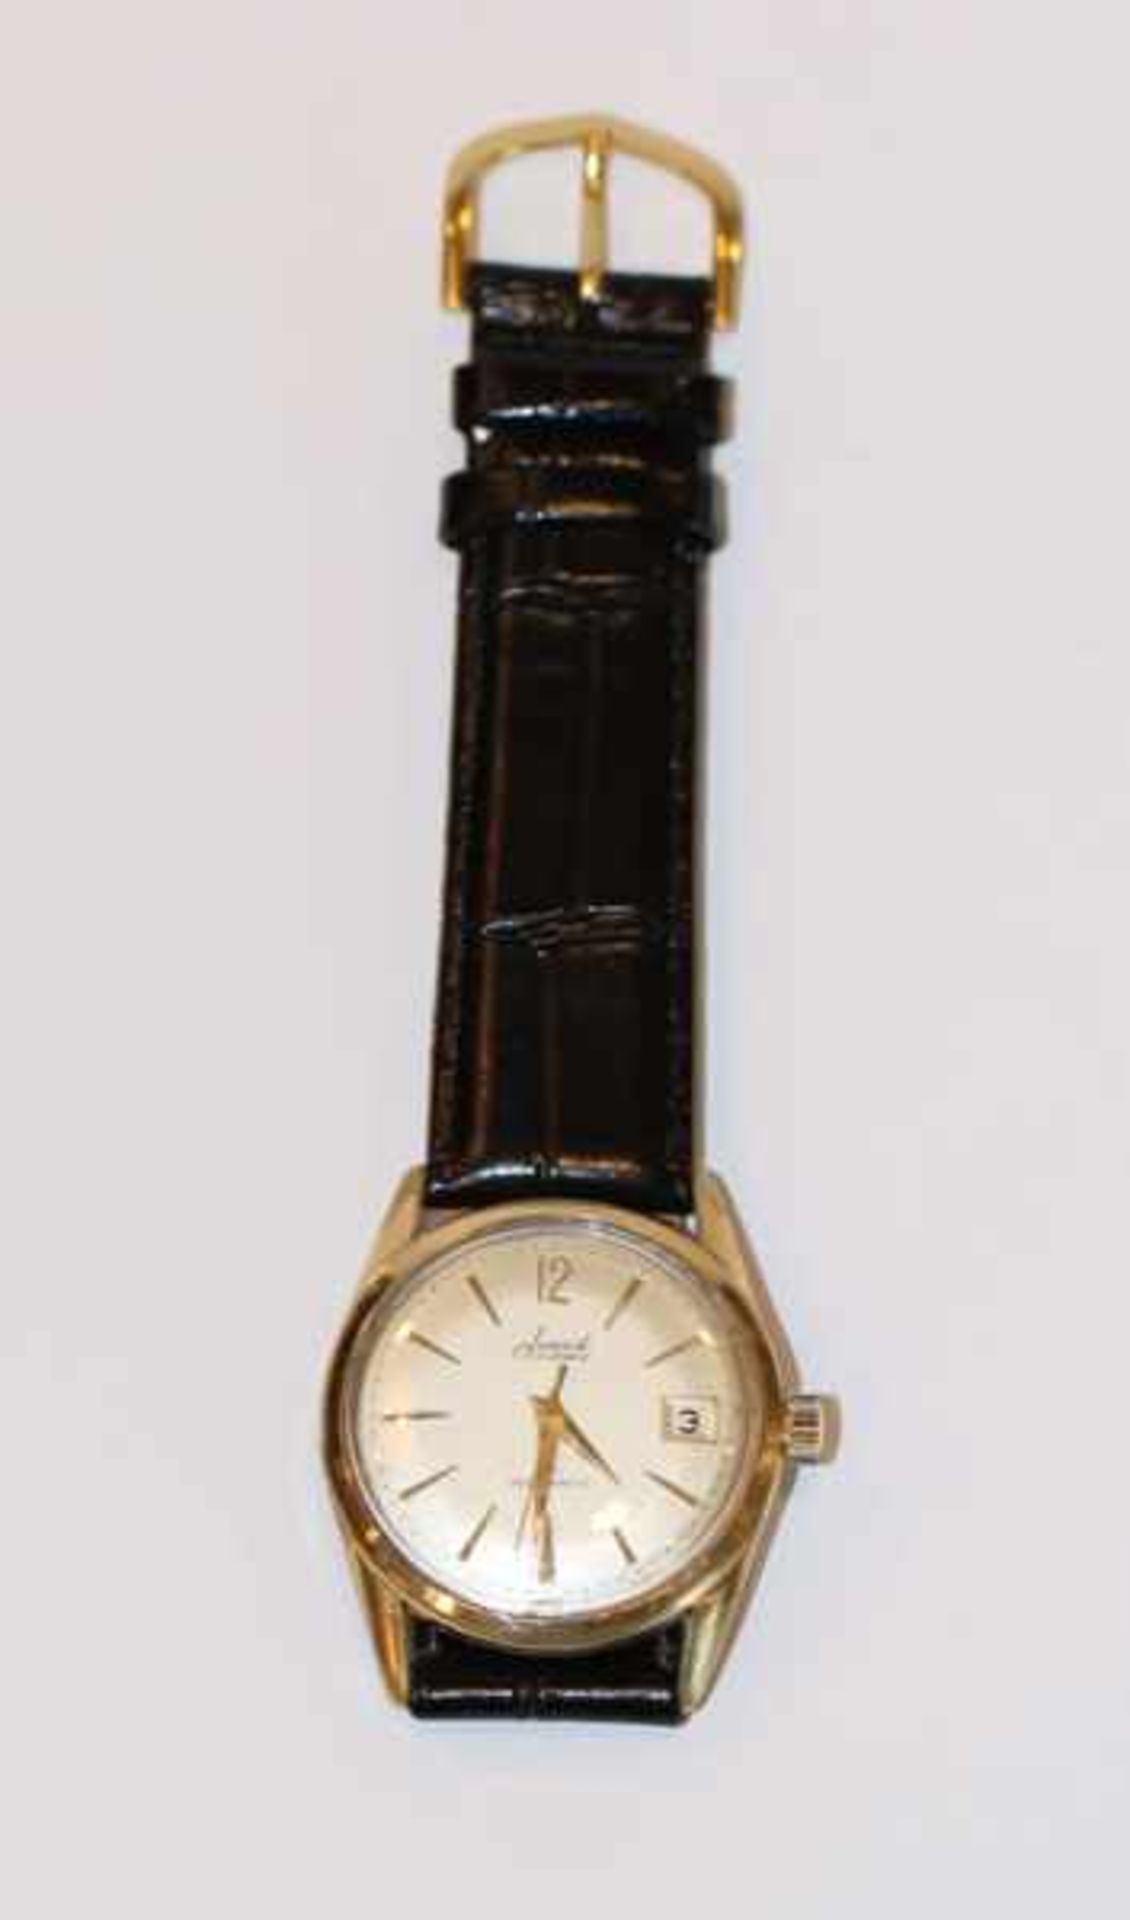 Accurist Herren Armbanduhr, Automatic mit Datum, intakt um 1960/70, an neuem schwarzen Lederarmband